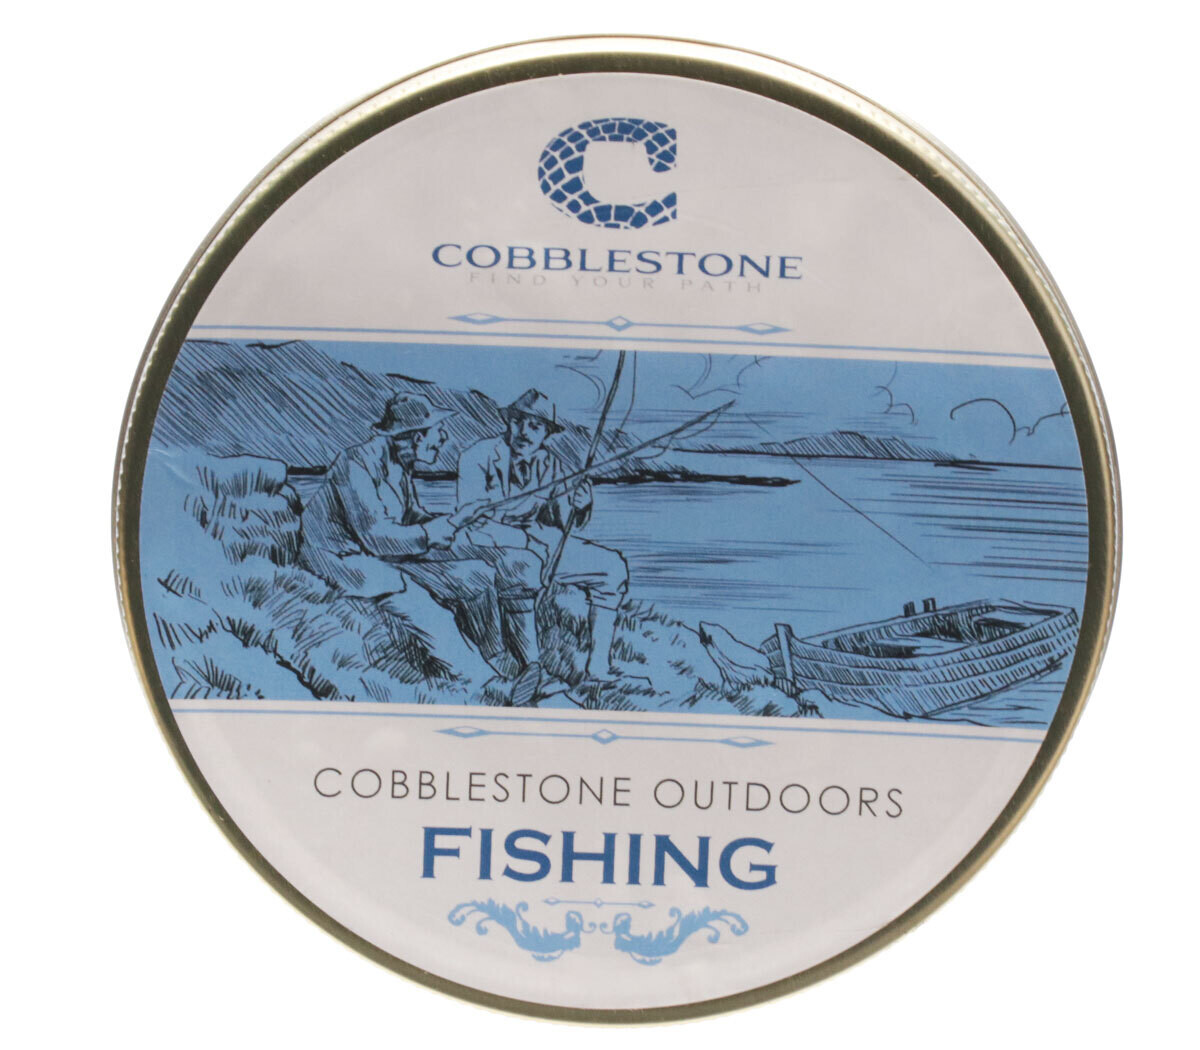 Cobblestone Outdoors Fishing Pipe Tobacco 50g Tin